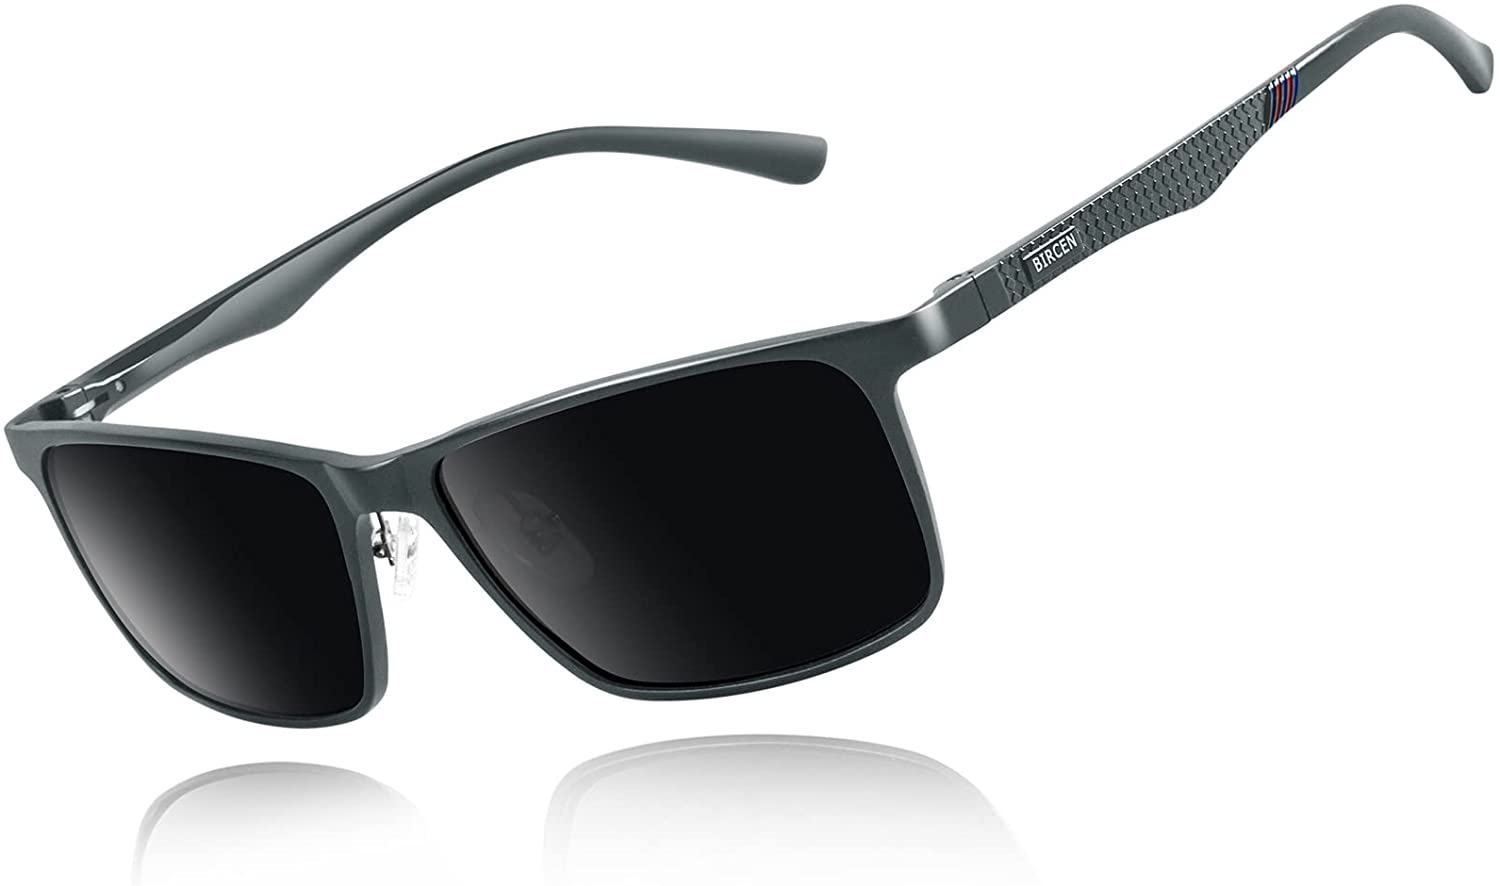 BIRCEN Mens Sunglasses Polarized UV Protection: Classic Shades for